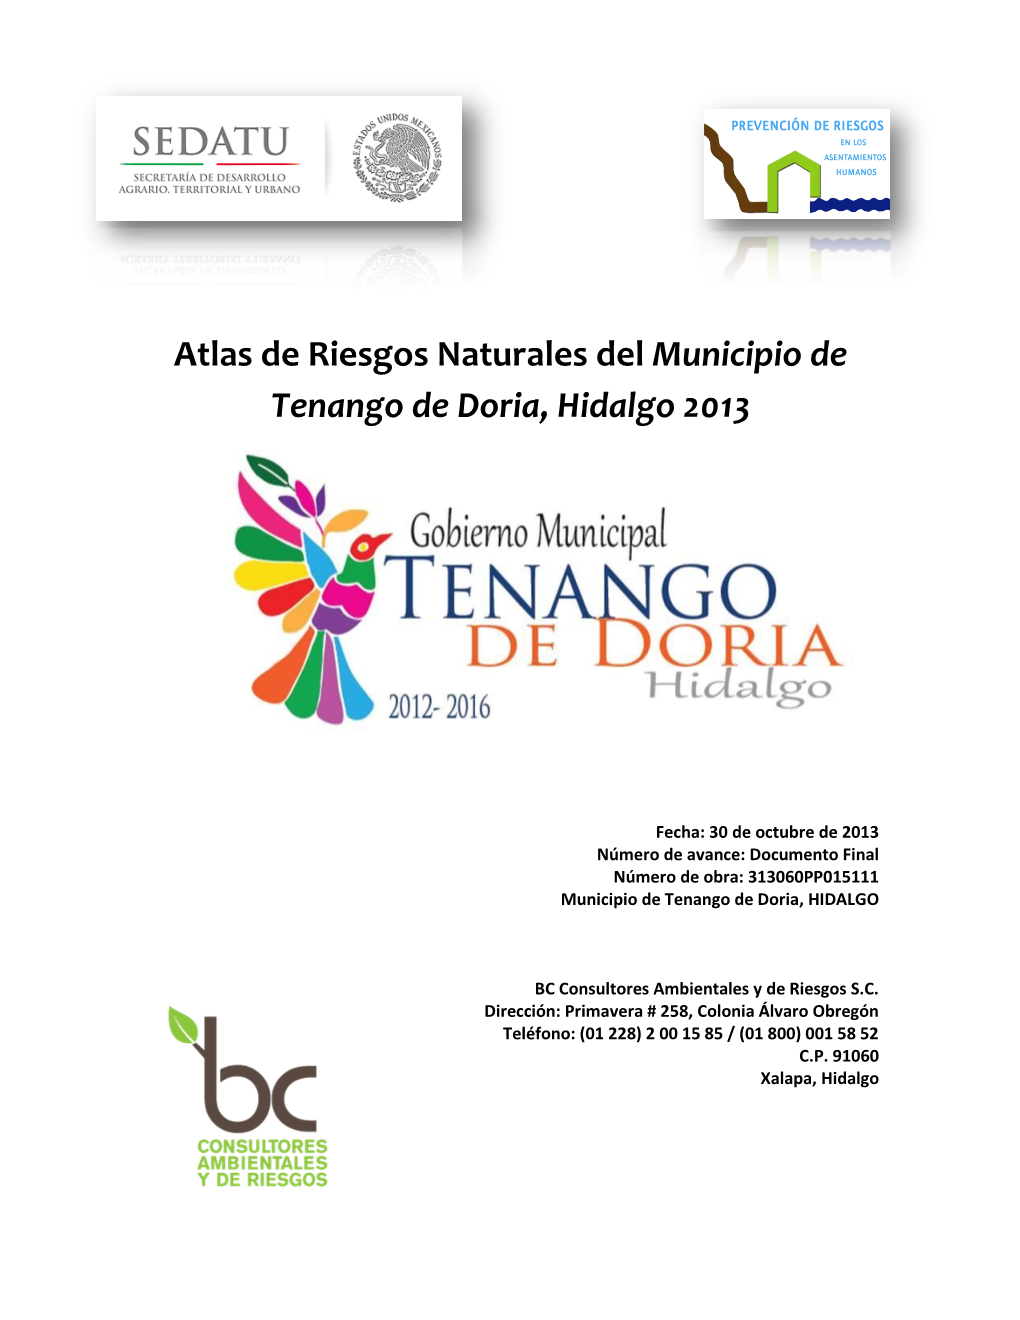 Atlas De Riesgos Naturales Del Municipio De Tenango De Doria, Hidalgo 2013